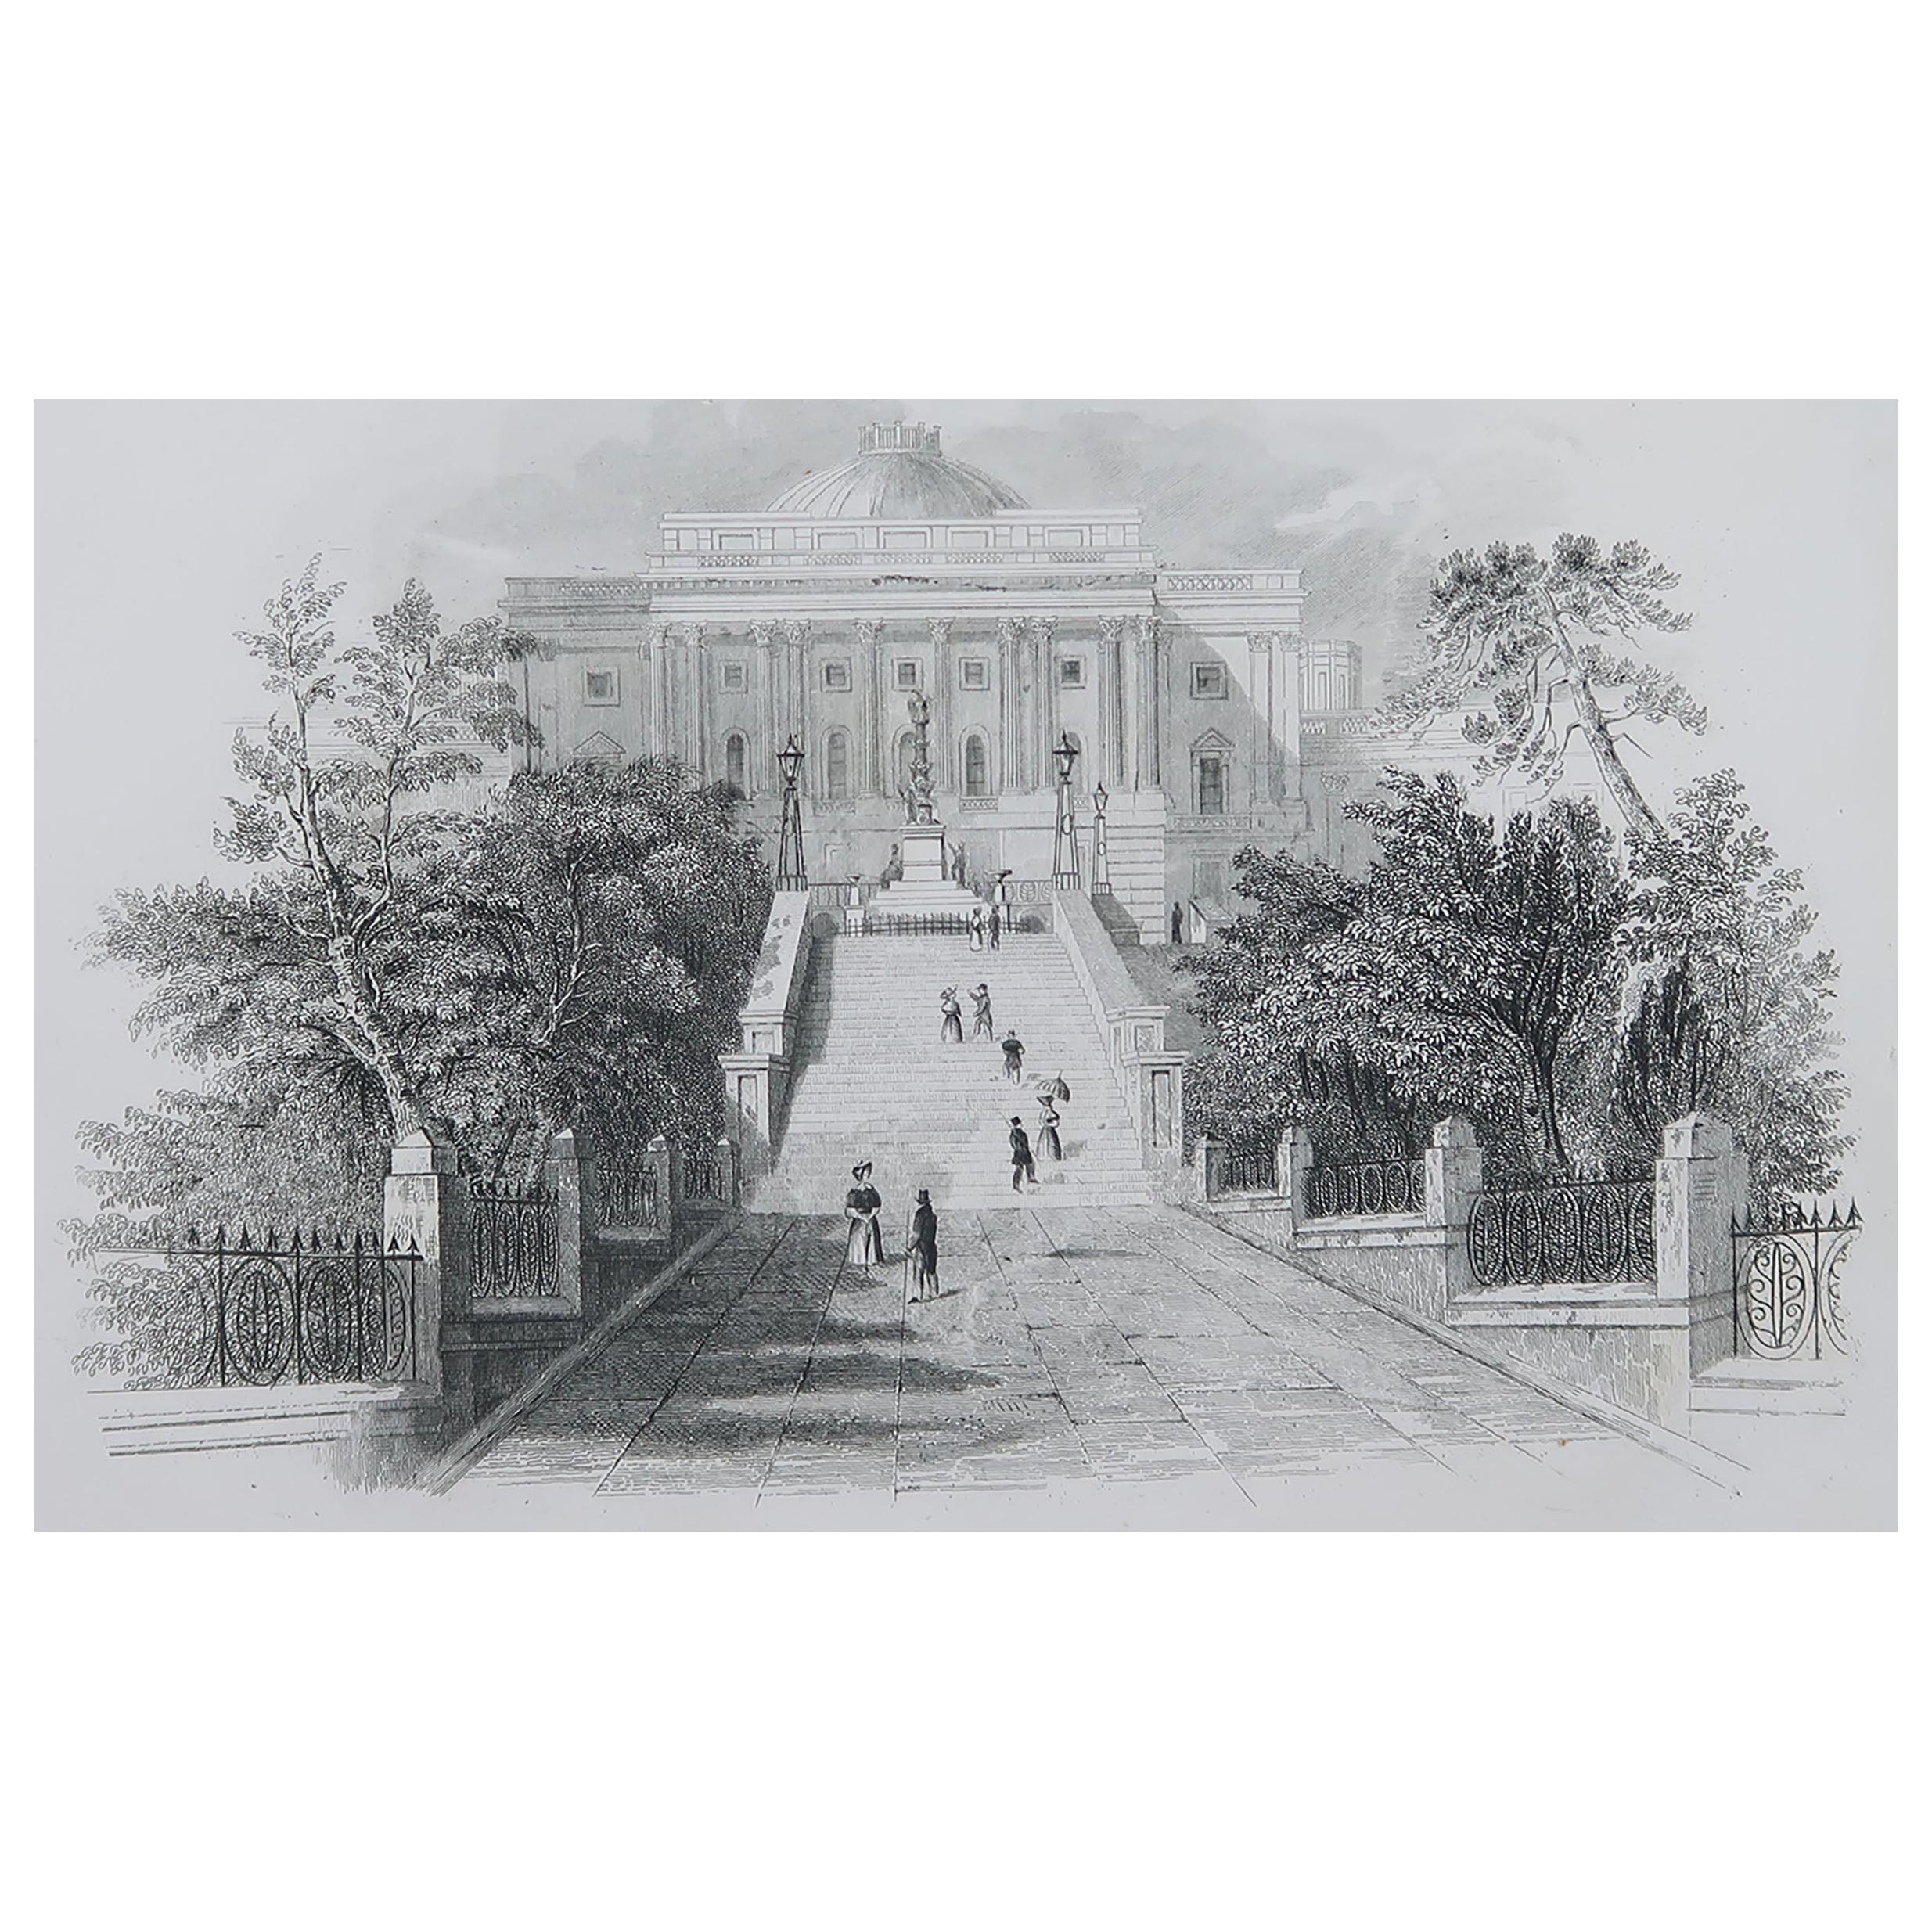 Original Antique Print of The US Capitol Building, Washington DC., 1827